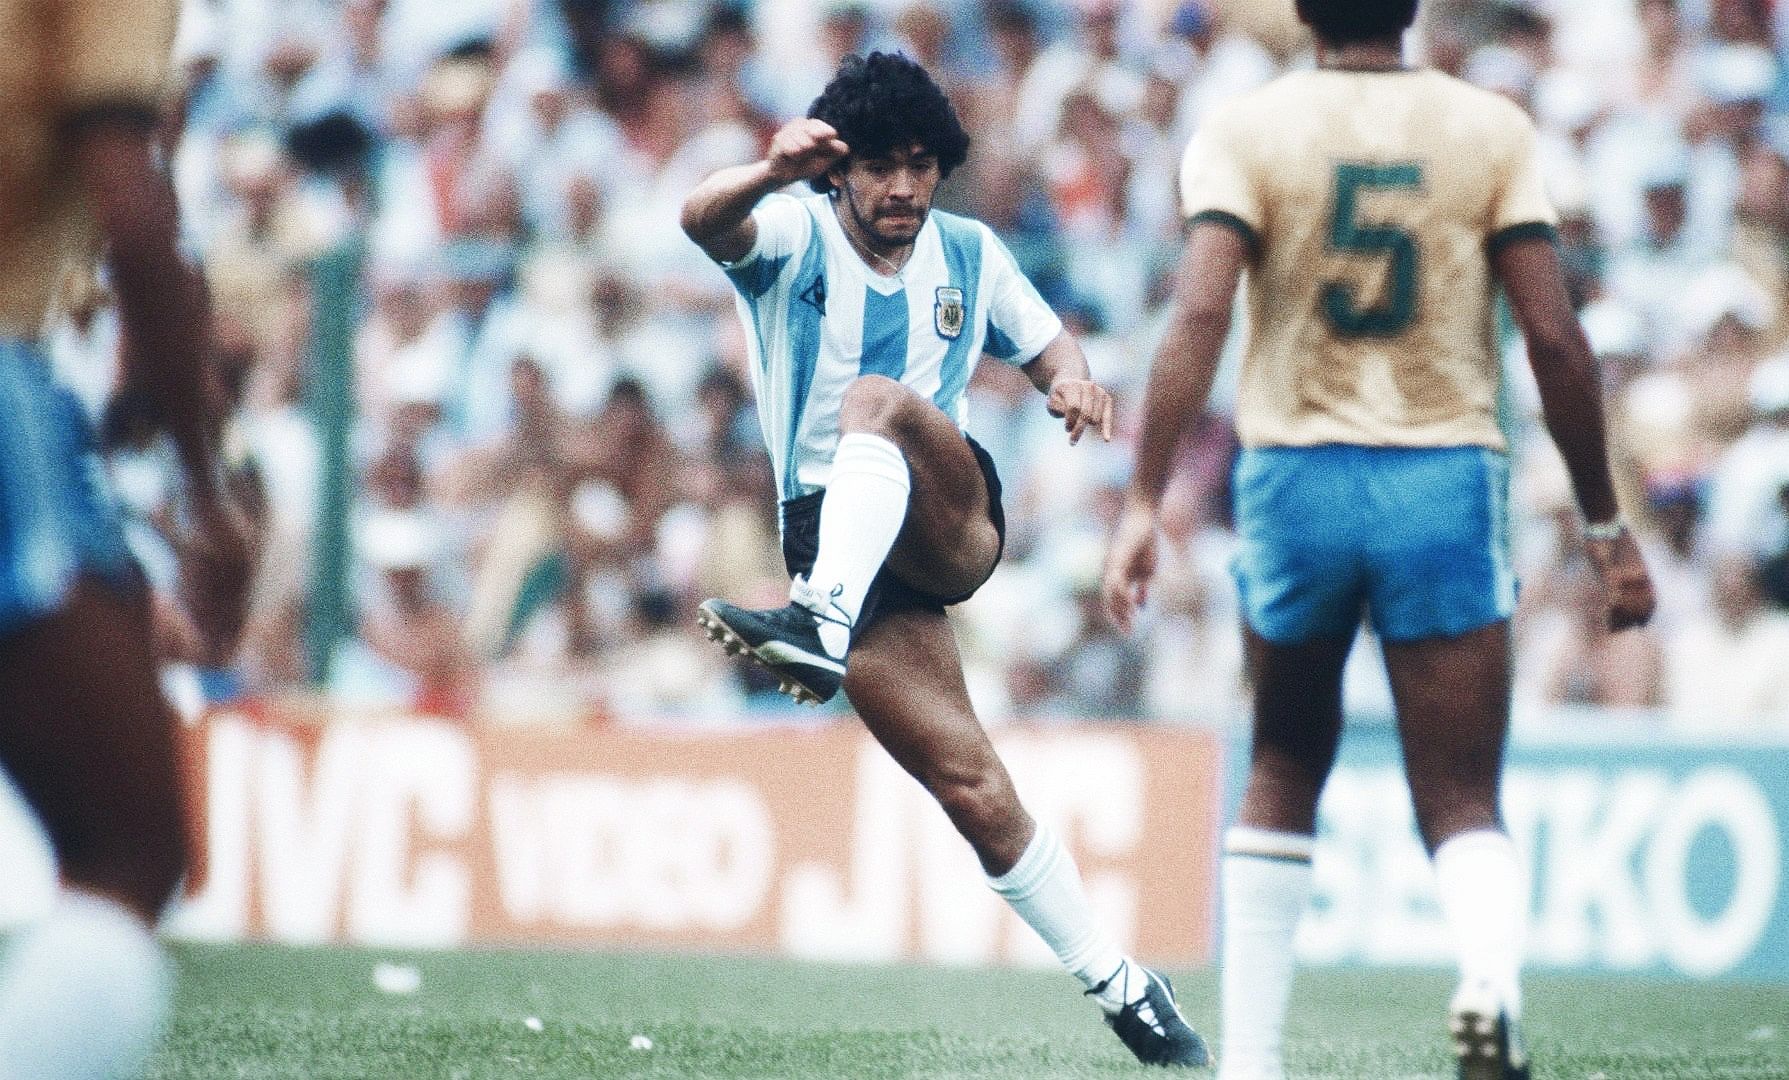 20201125_wb_maradona-14-1982.jpg